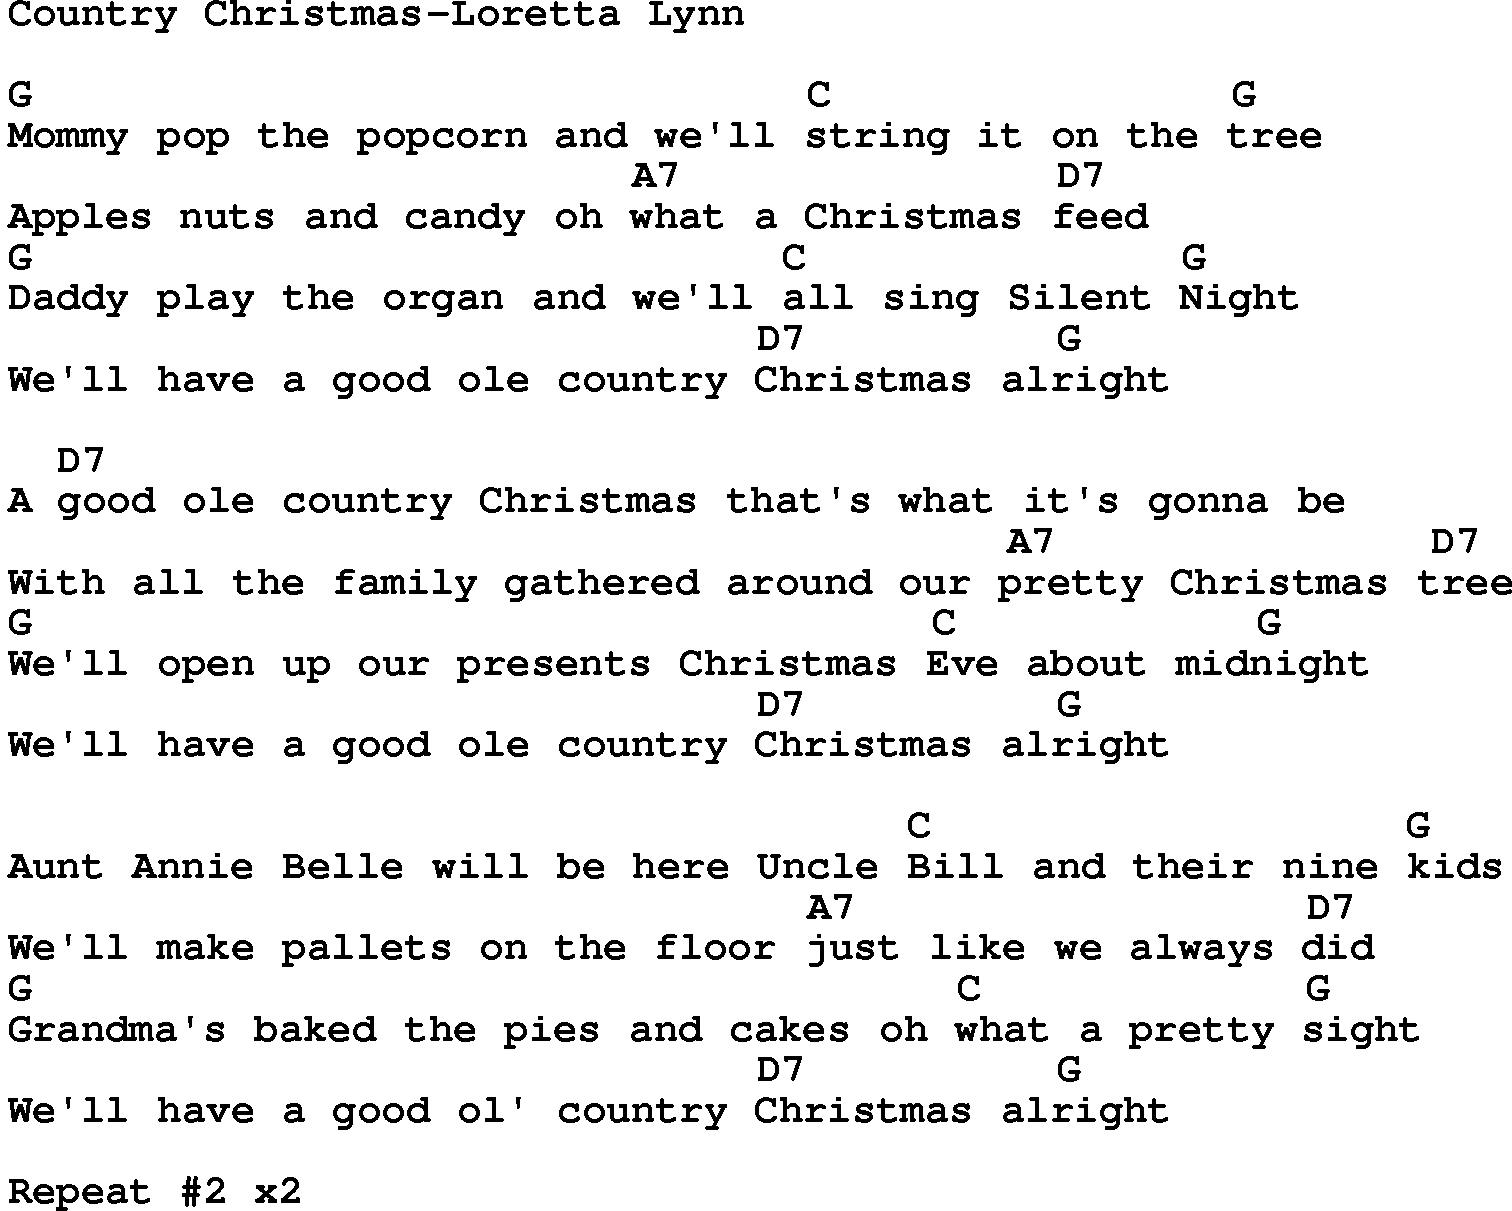 Country music song: Country Christmas-Loretta Lynn lyrics and chords